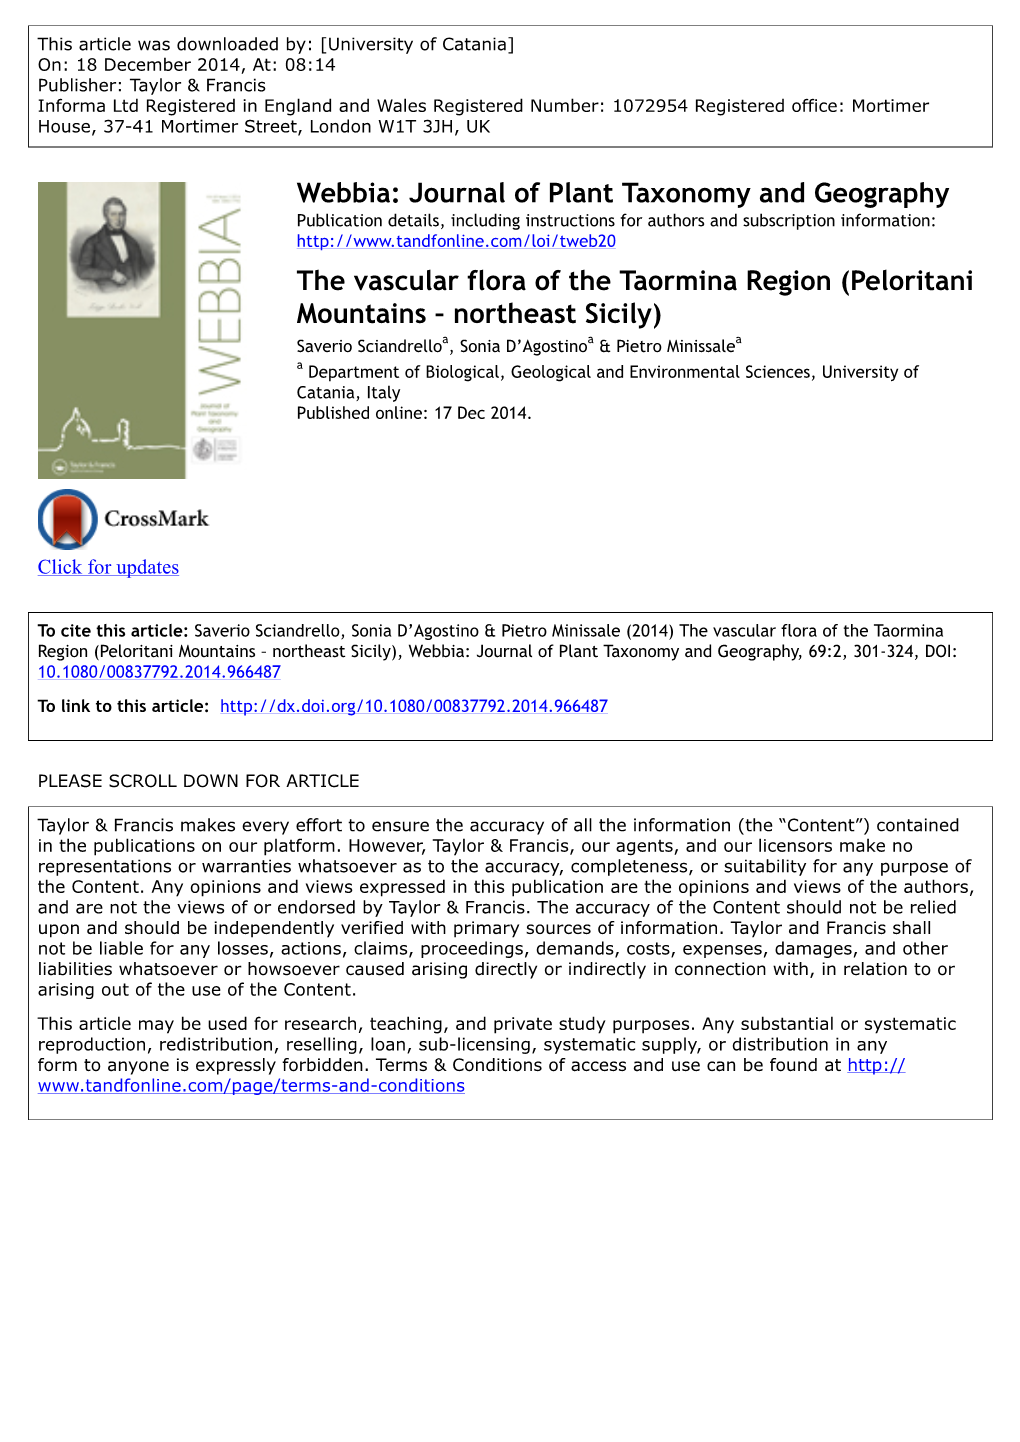 The Vascular Flora of the Taormina Region